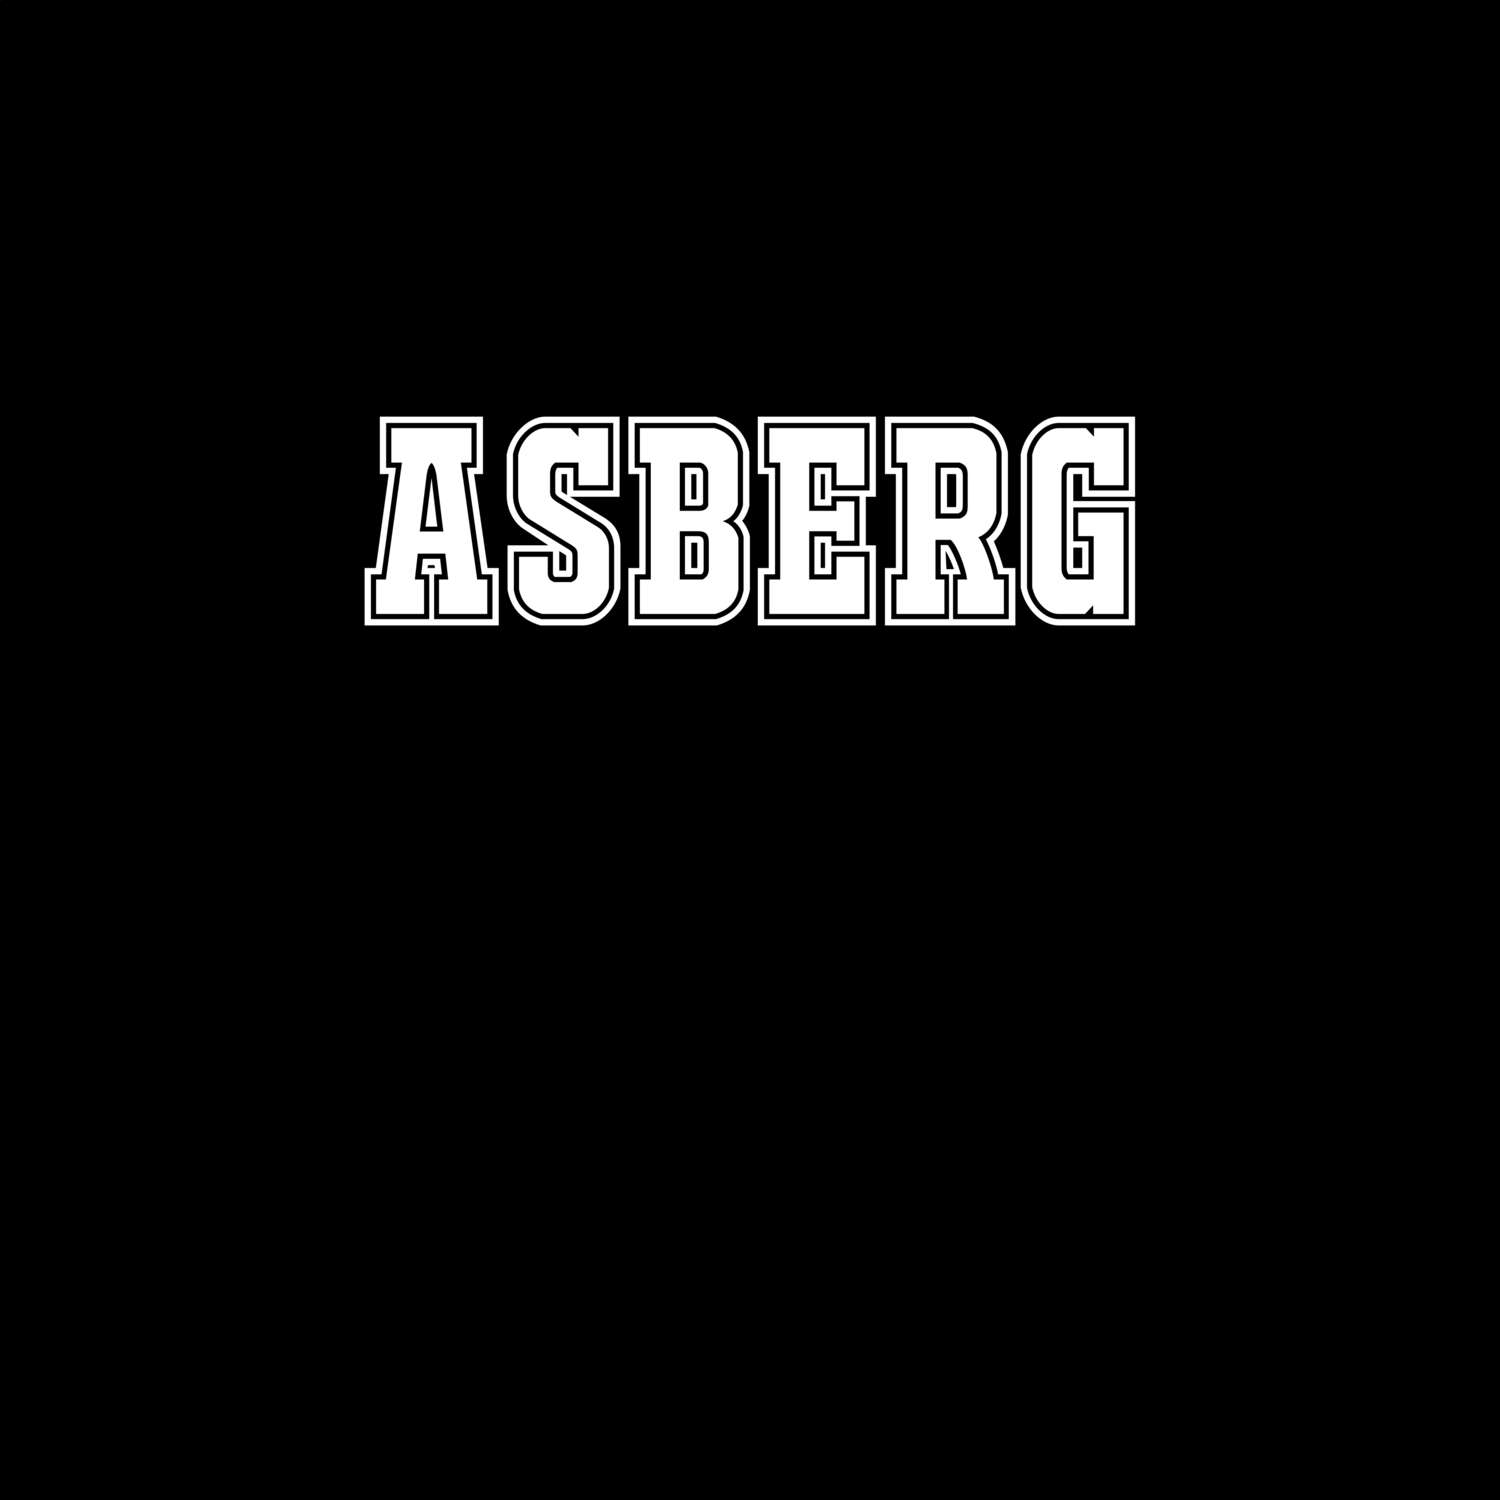 Asberg T-Shirt »Classic«